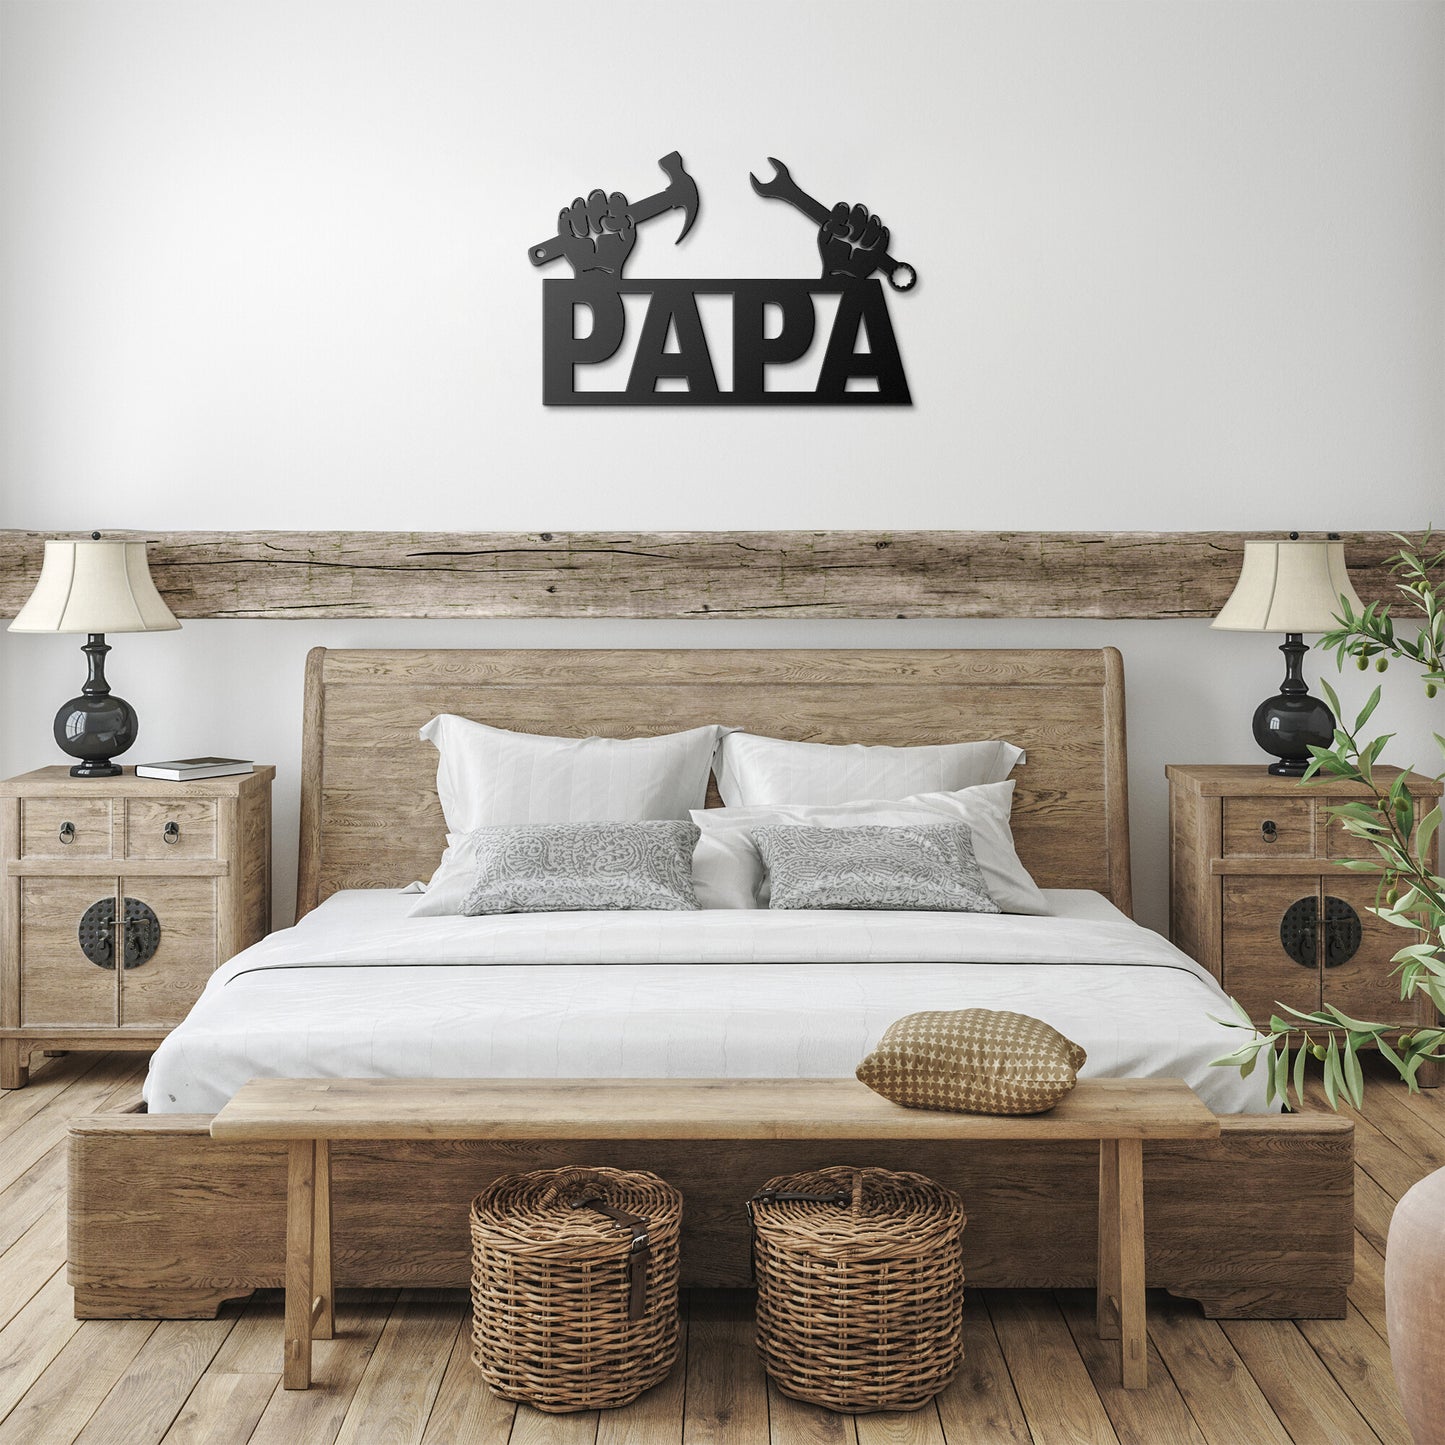 PAPA Metal Sign